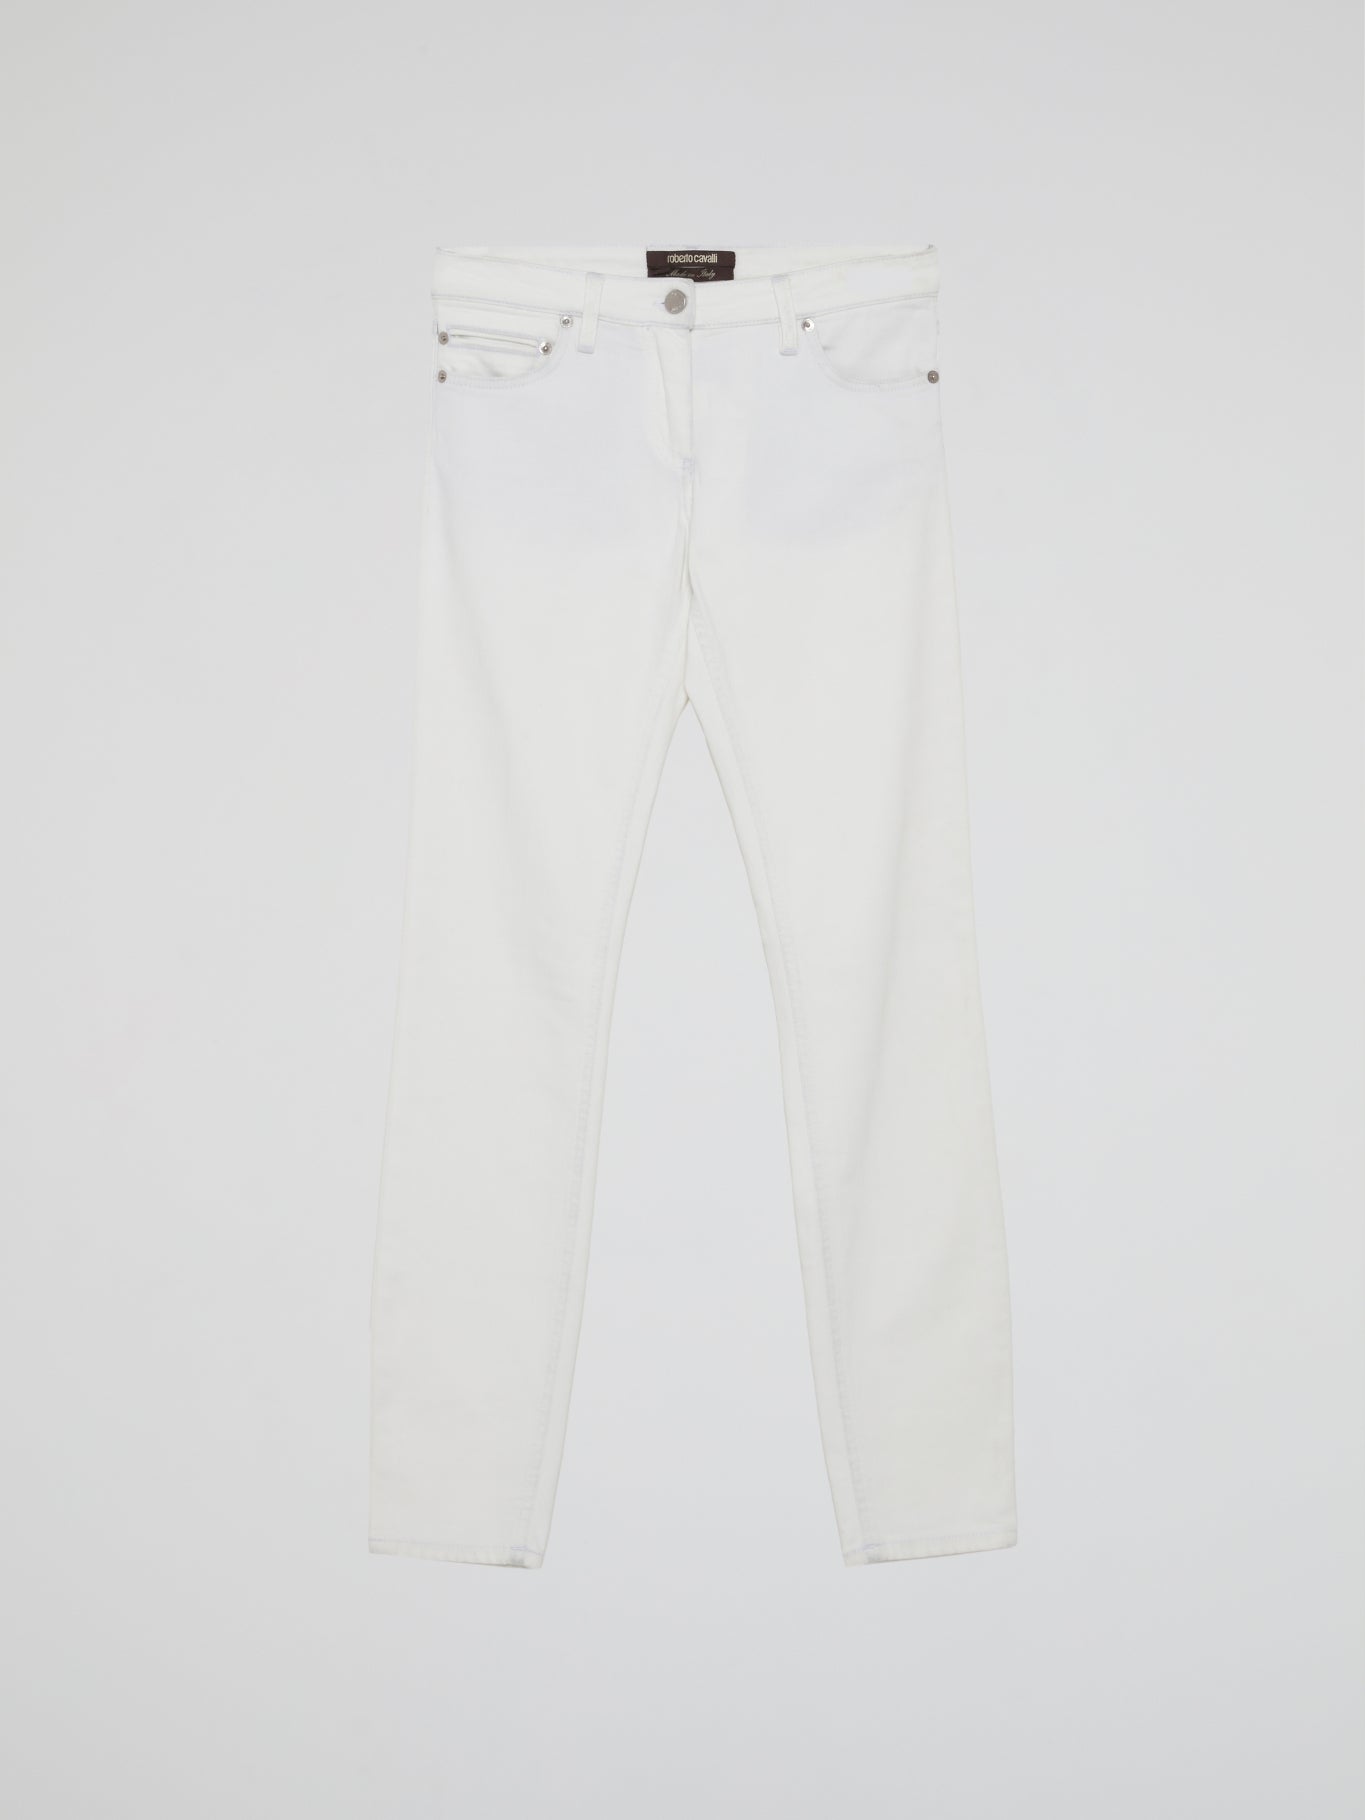 White Slim Fit Jeans